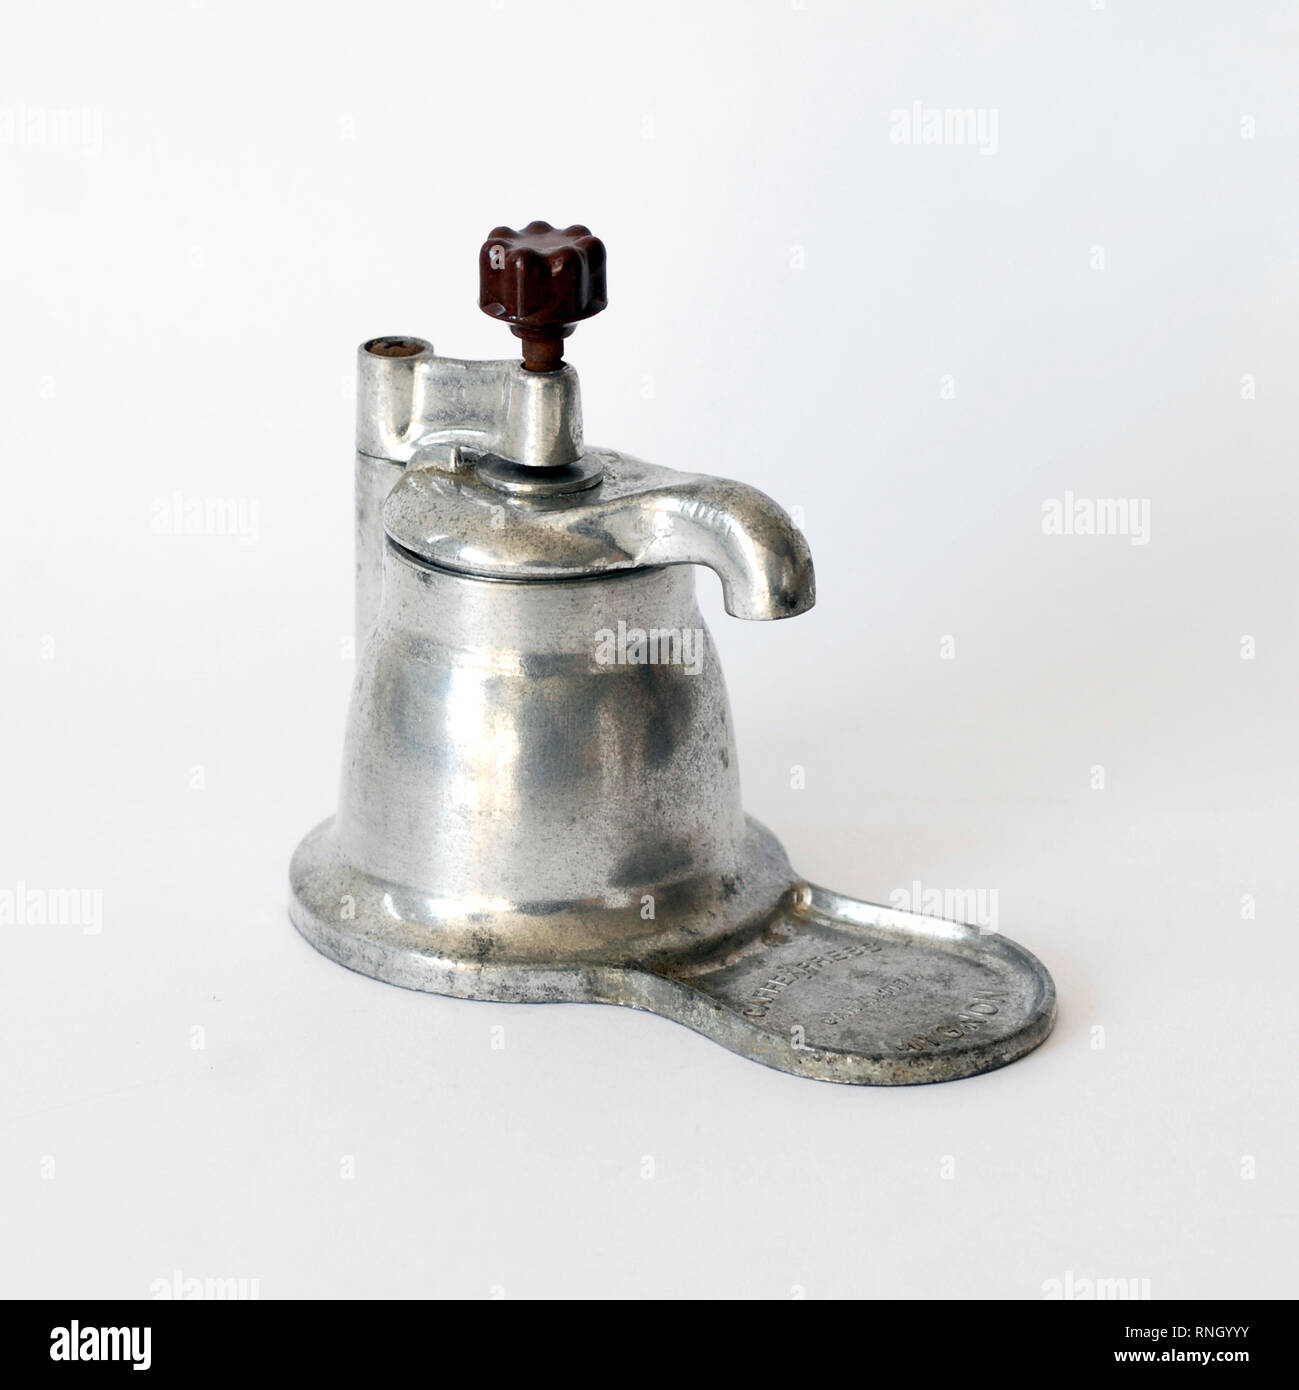 Vintage Italian CoffeeMaker | 3D model